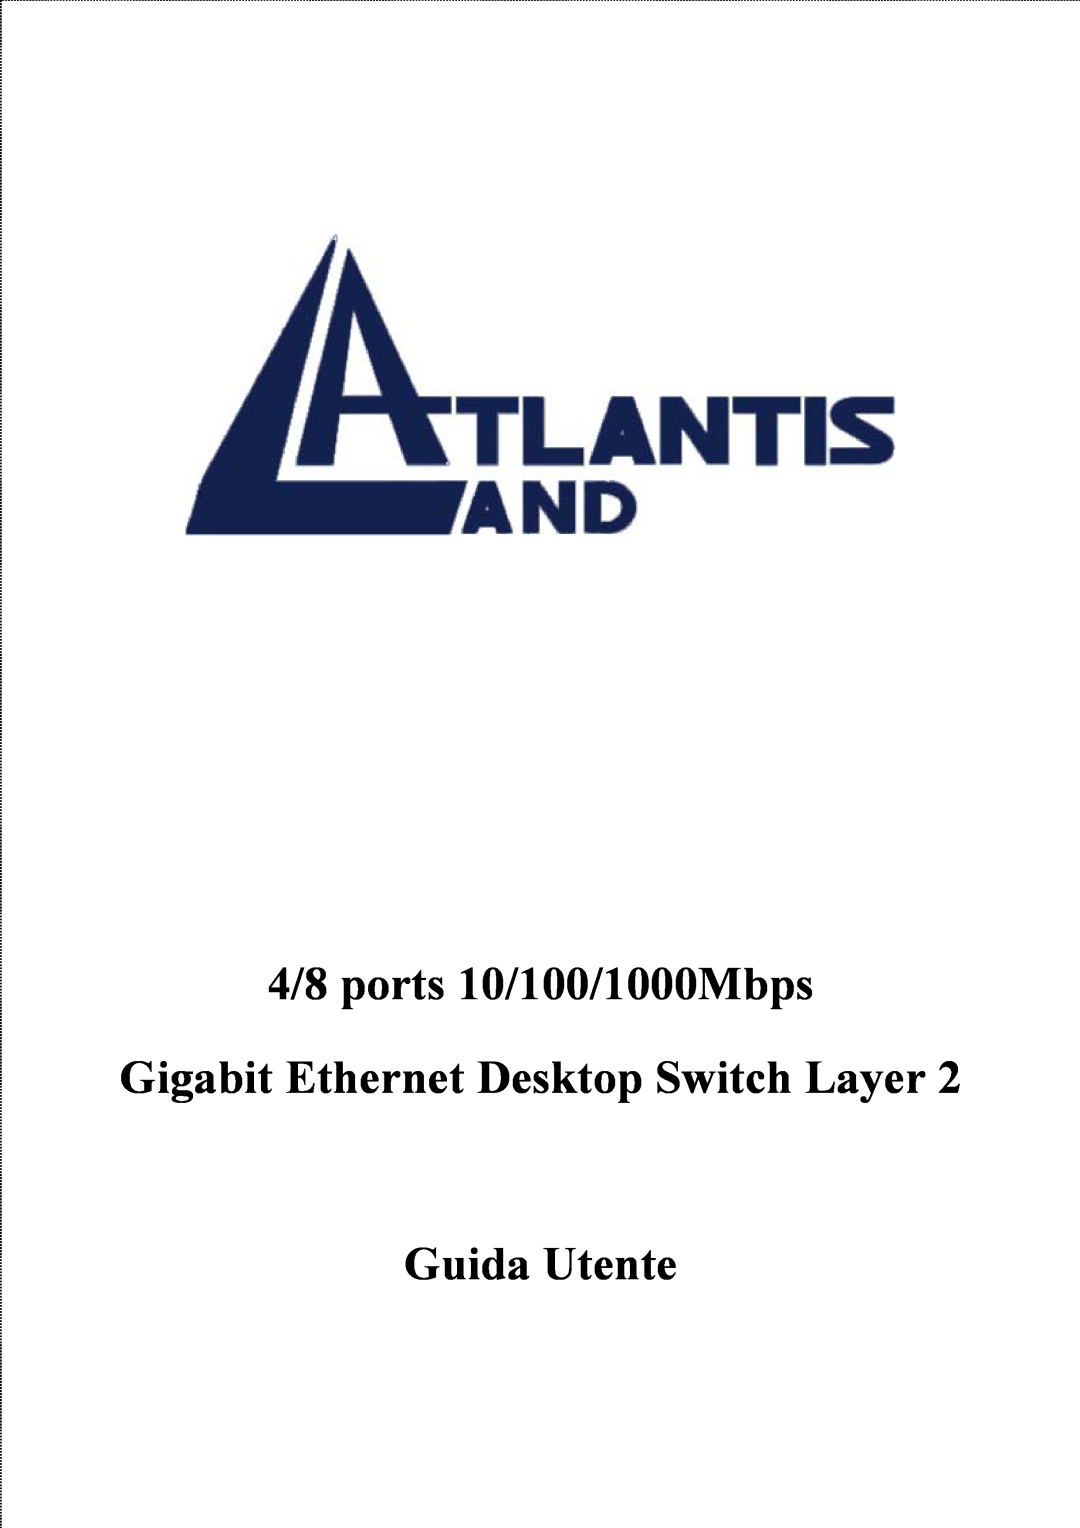 Atlantis Land manual 4/8 ports 10/100/1000Mbps Gigabit Ethernet Desktop Switch Layer, Guida Utente 